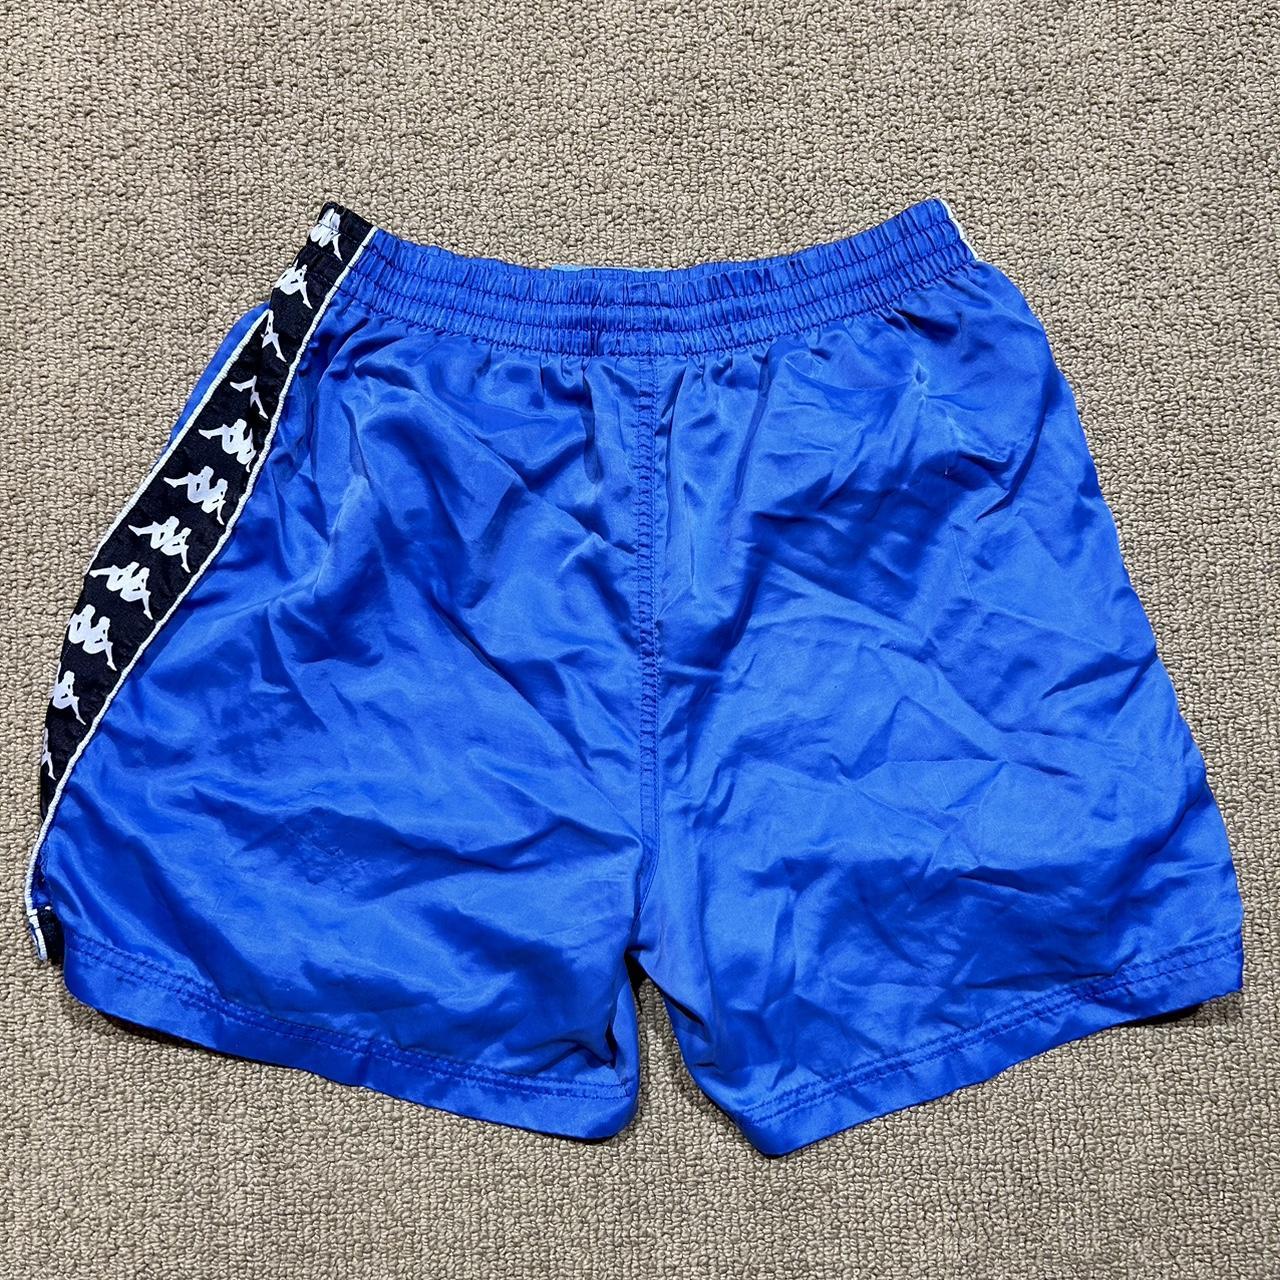 Kappa Men's Blue and Black Shorts | Depop